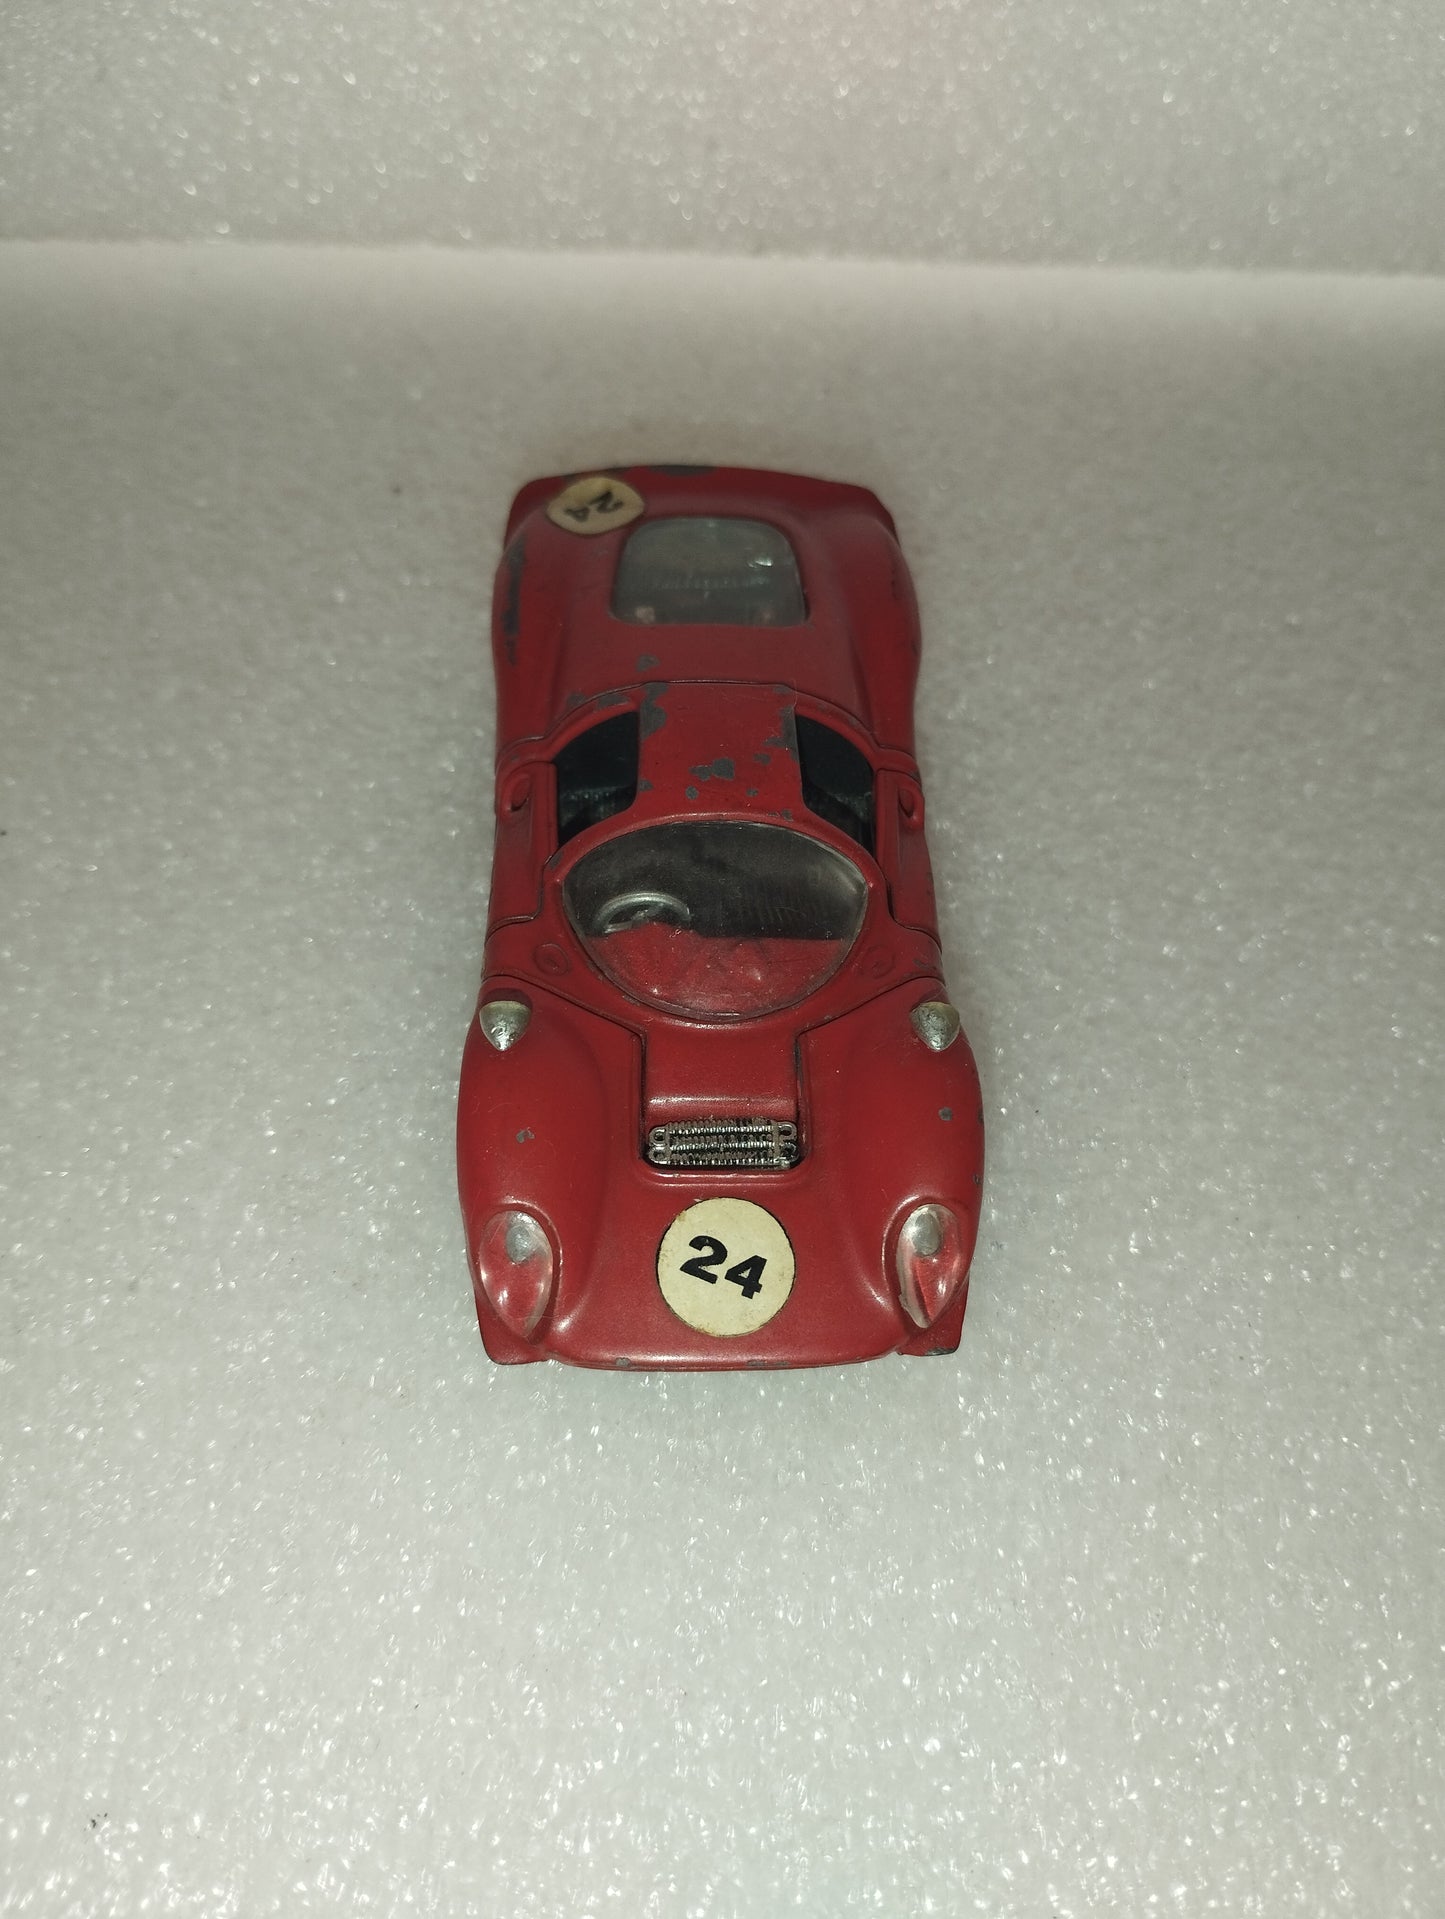 Ferrari P4 Mebetoys
Scala 1:43
Made in Italy